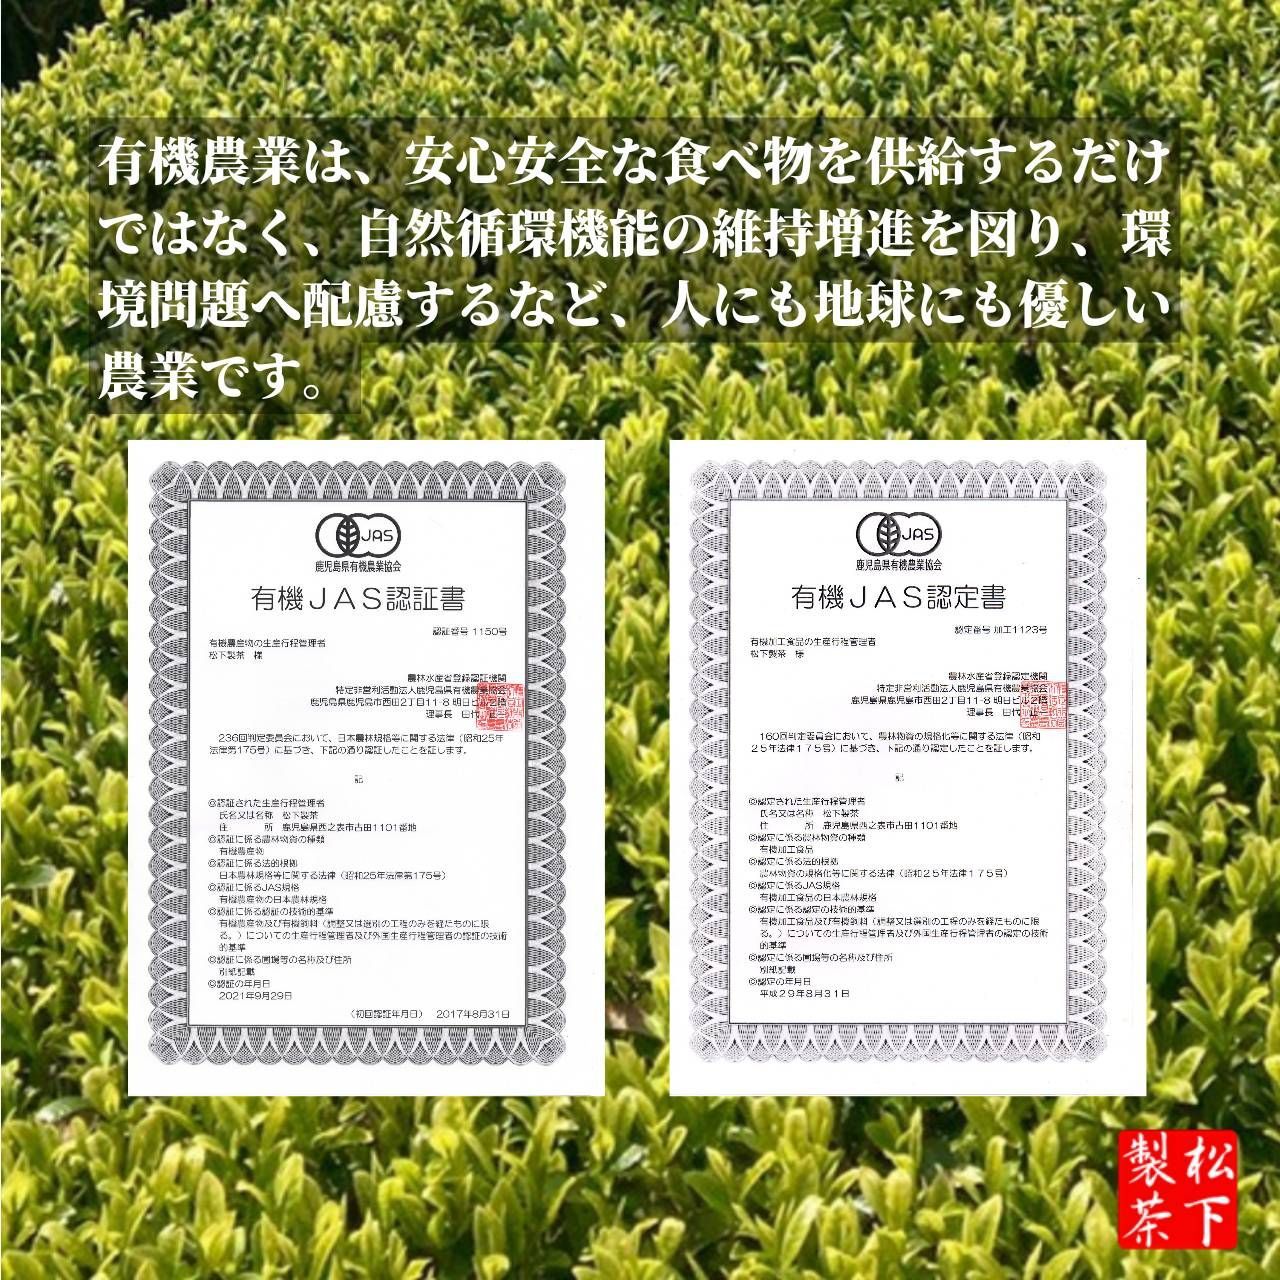 【2022年産/希少品種】種子島の有機緑茶『松寿』 茶葉(リーフ) 100g-5